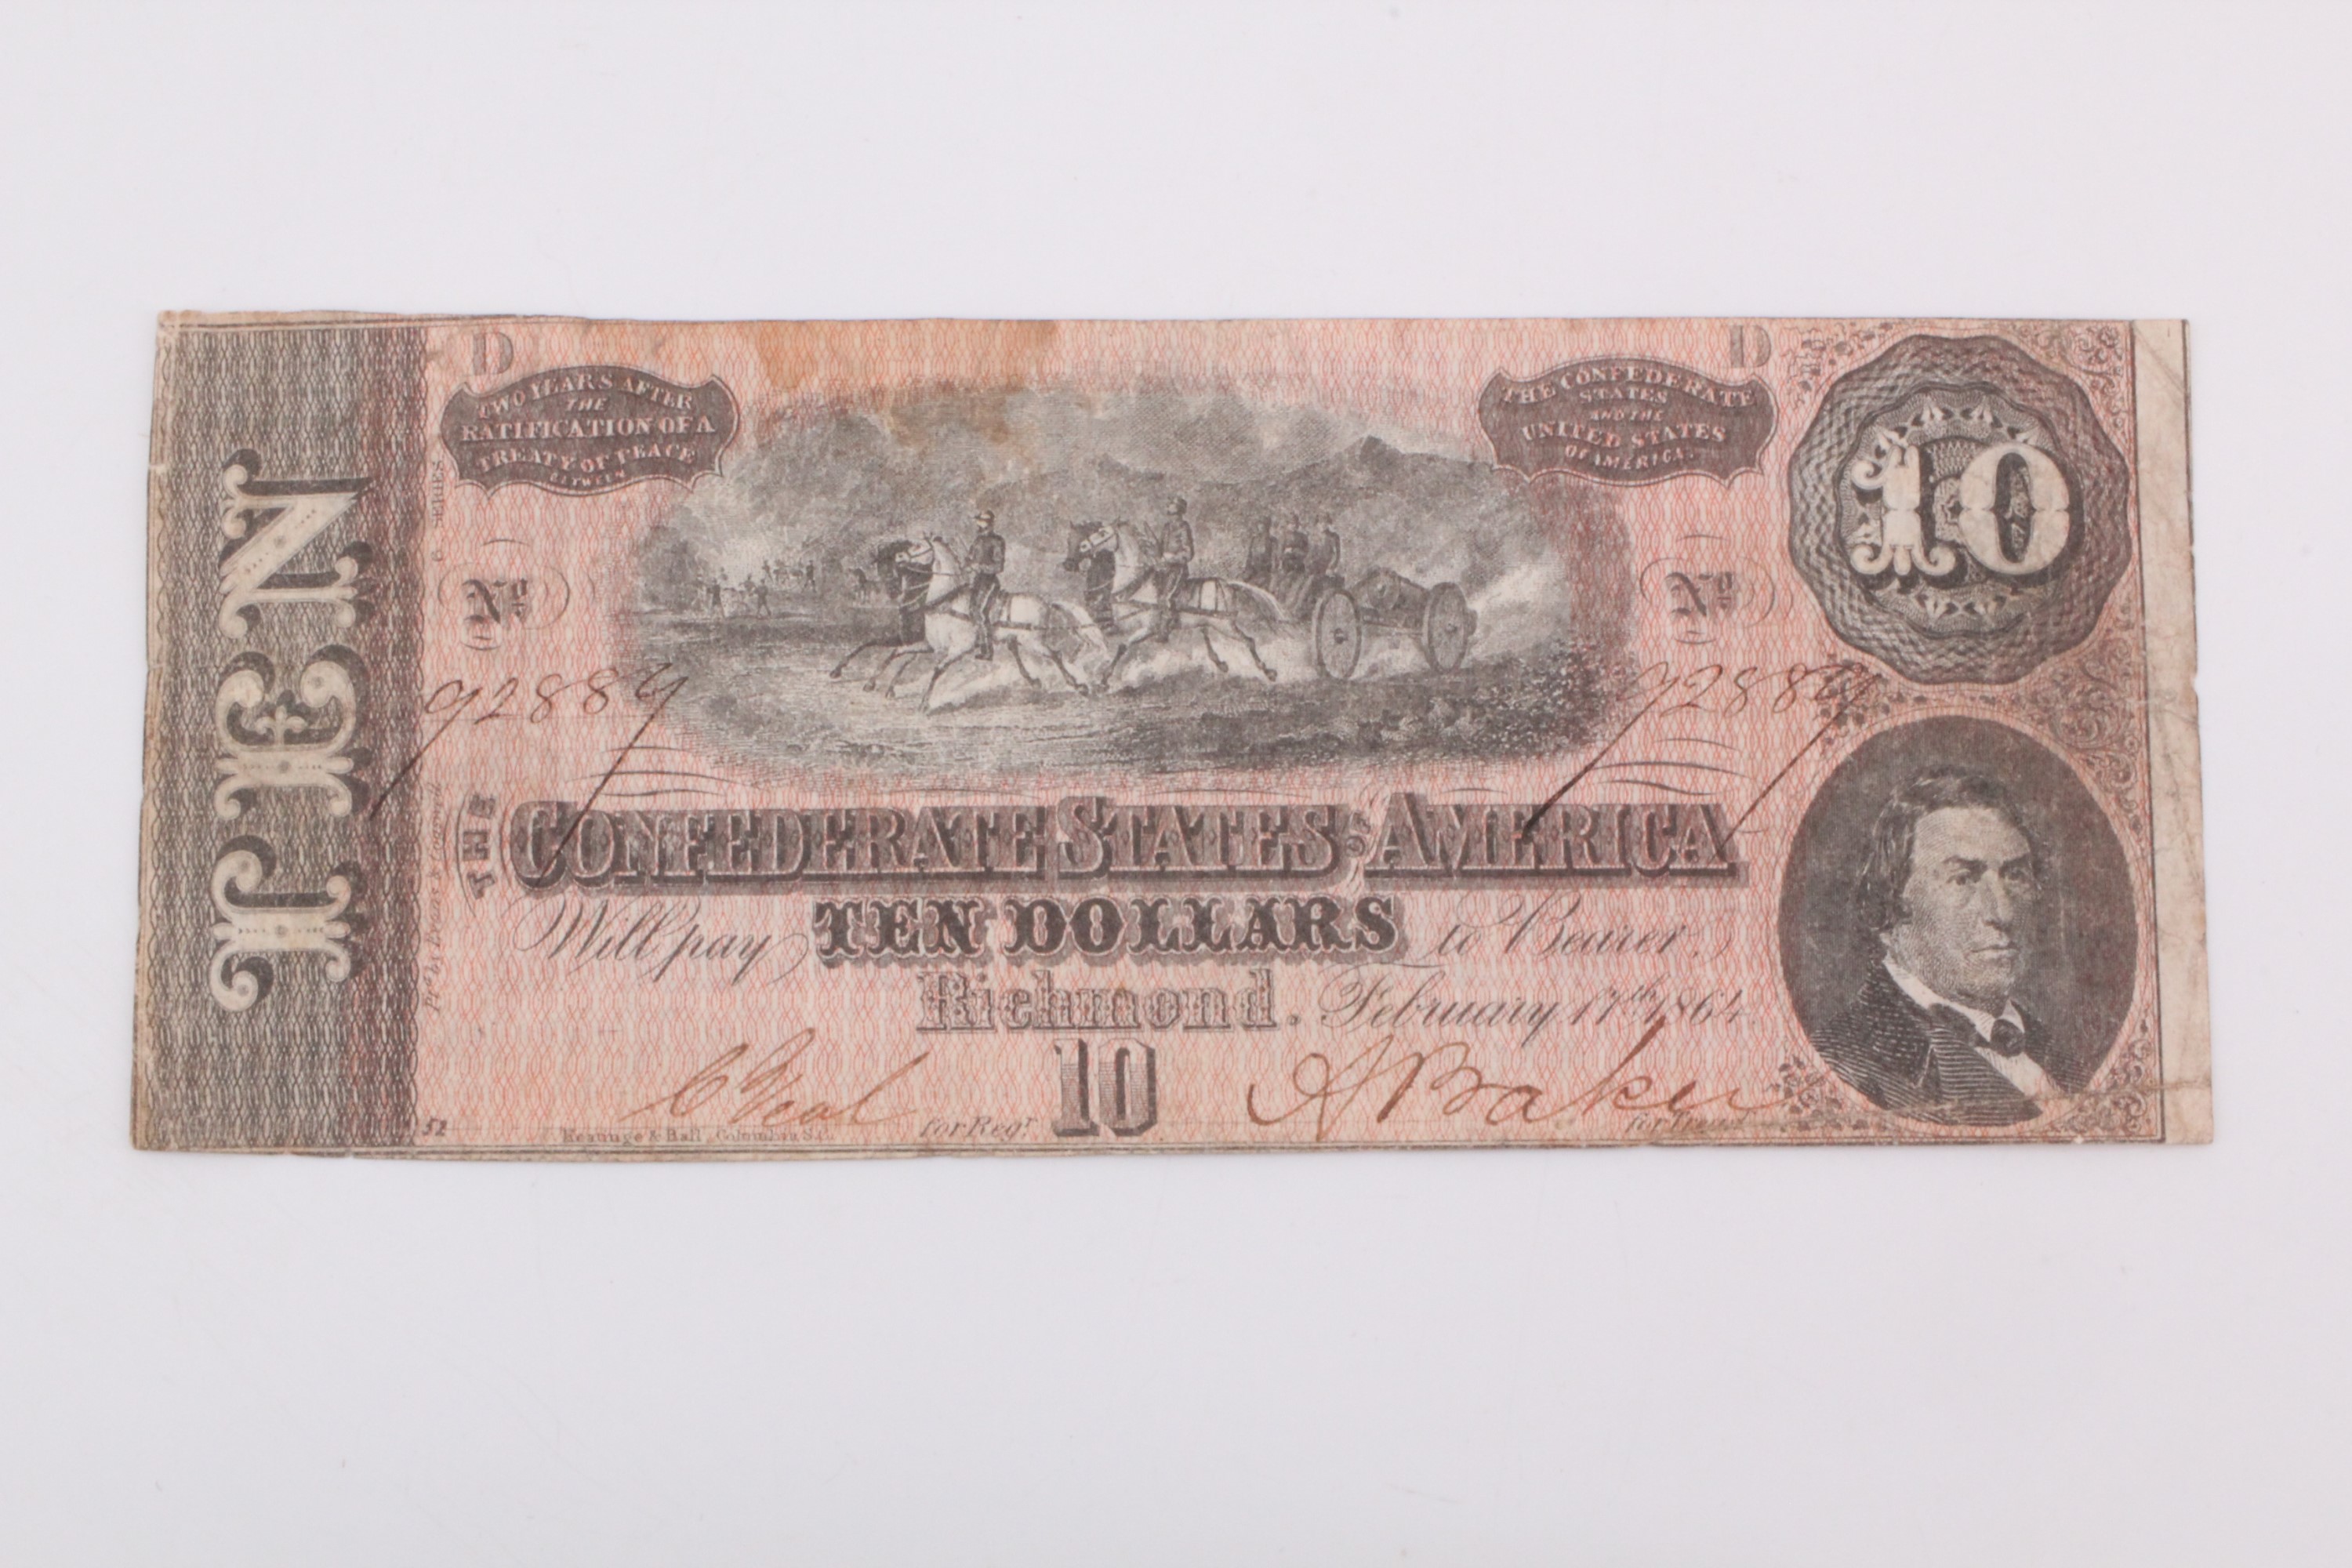 A Confederate States of America 1864 Richmond 10 dollar banknote